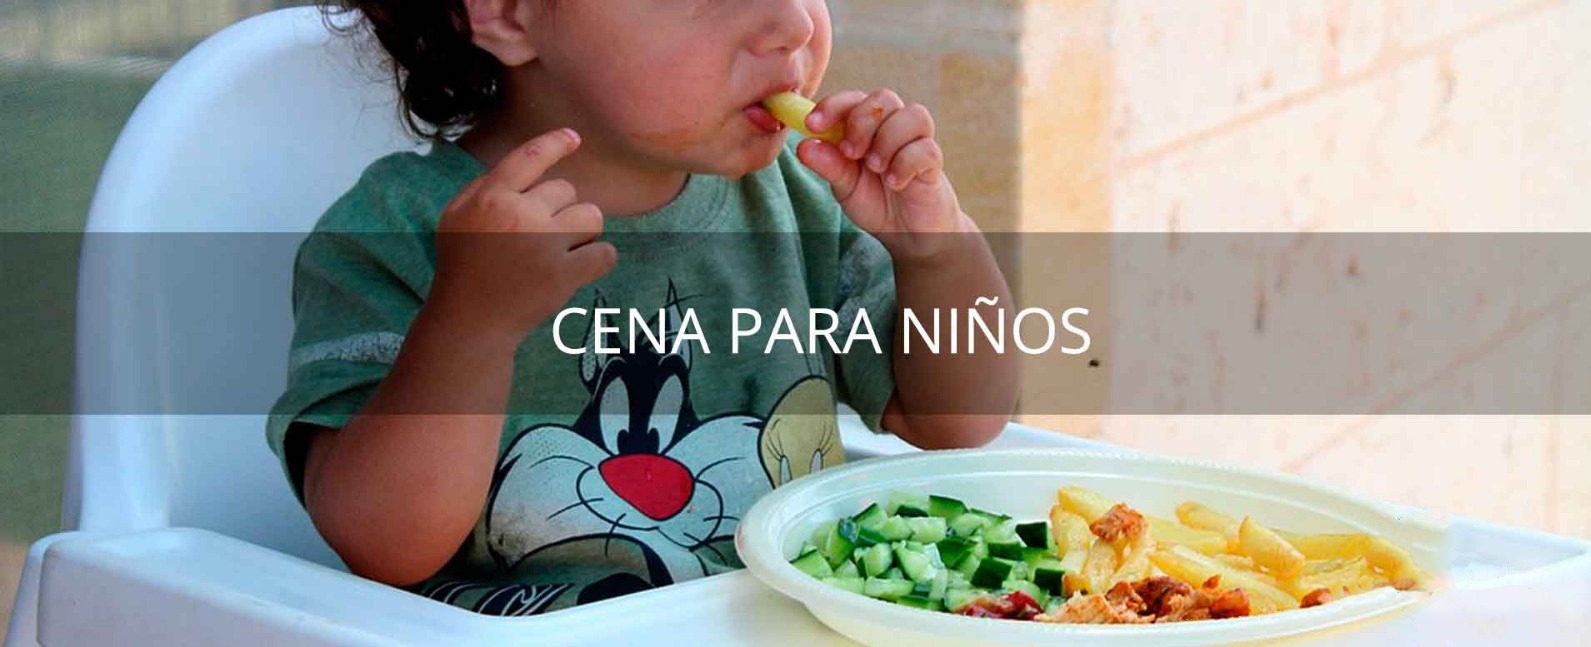 Cenas Para Niños con Menú Escolar | Mar Cobos